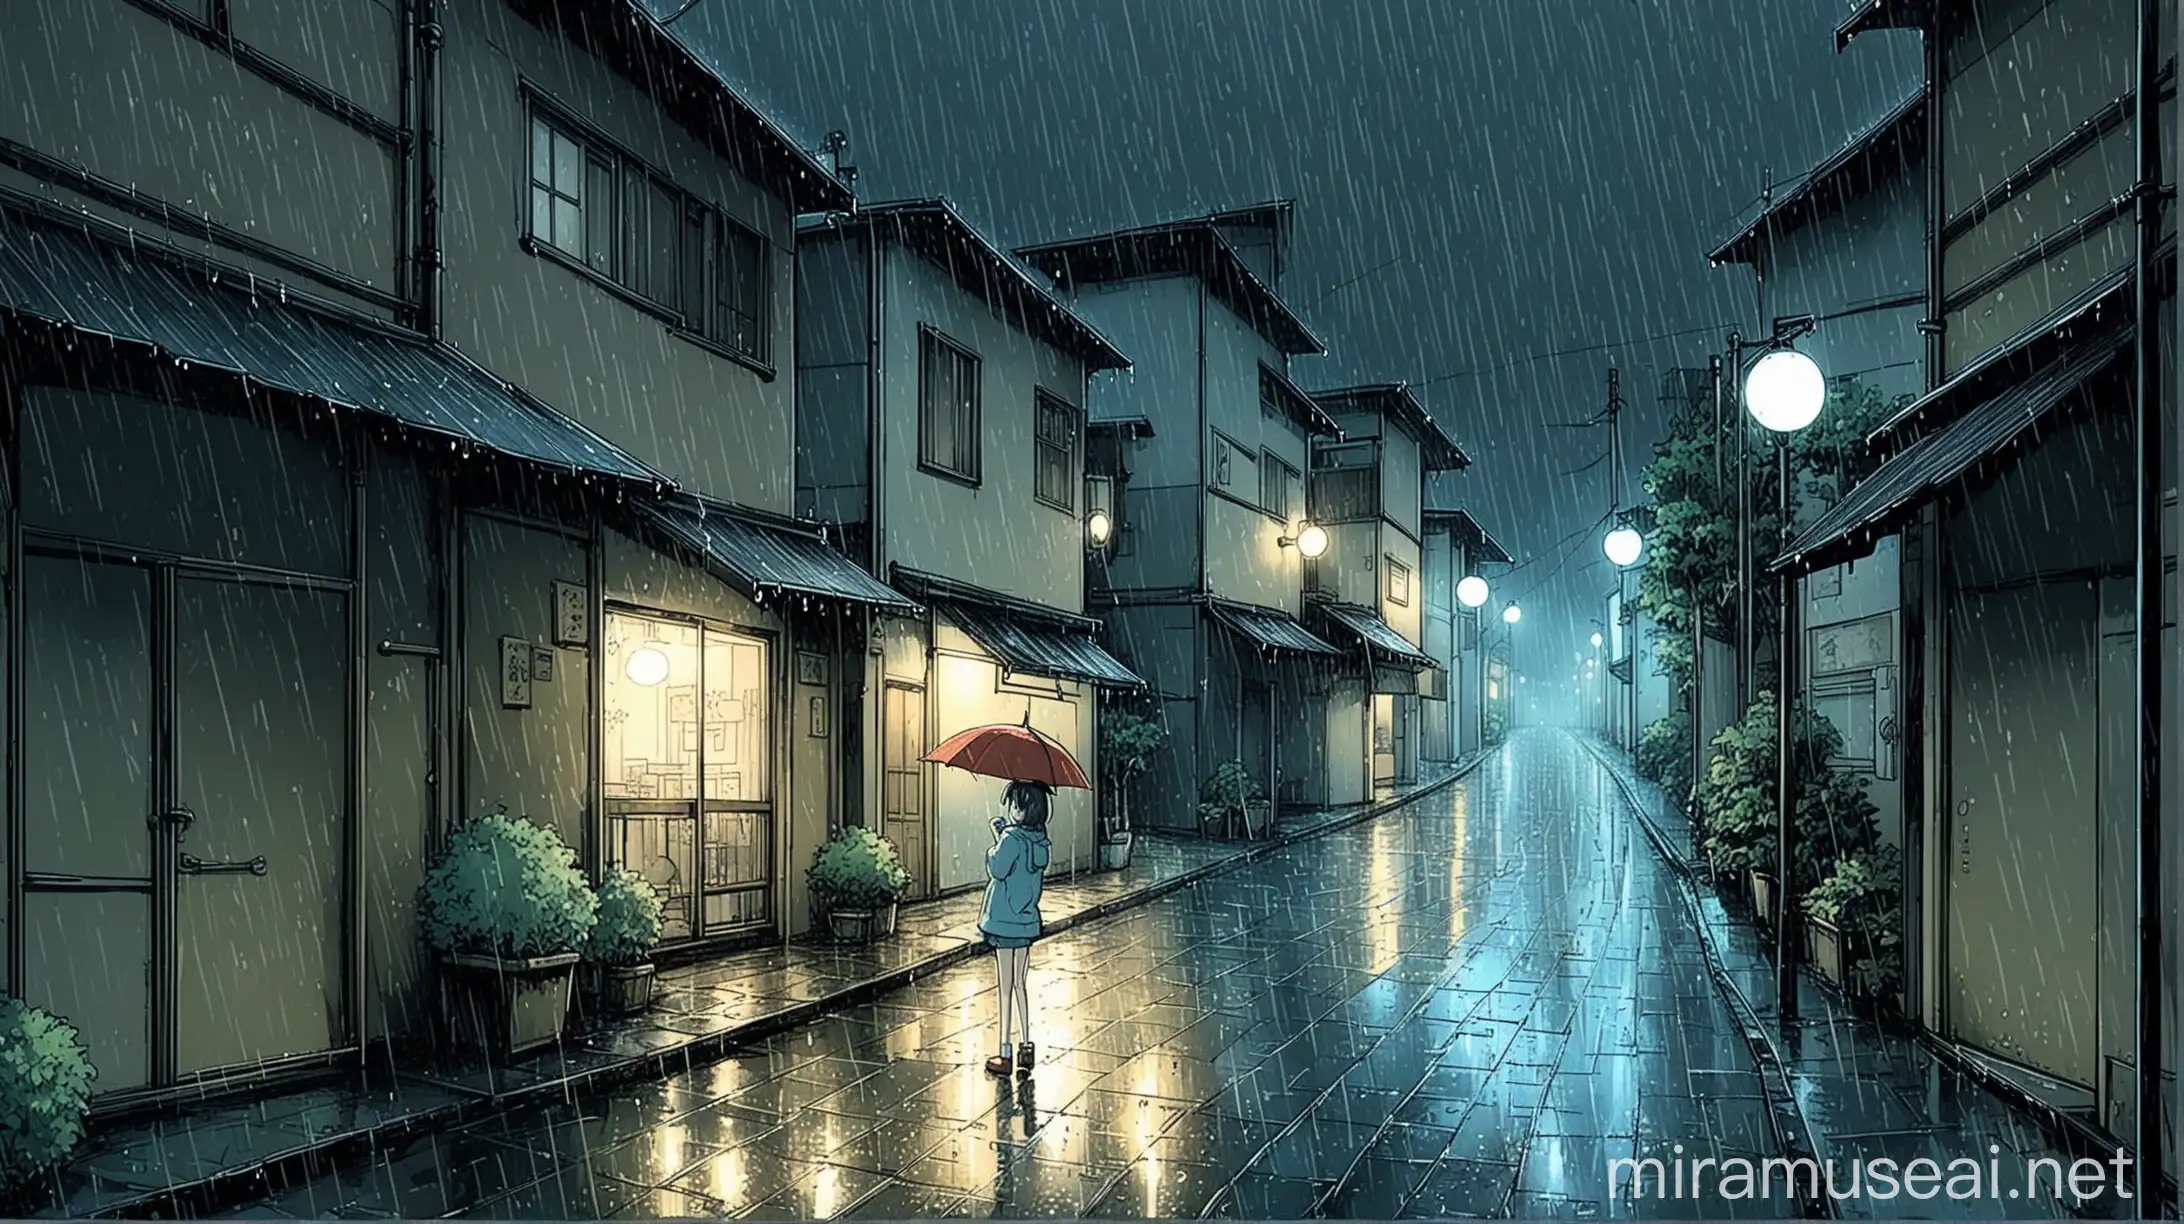 rainy night, quiet street, super anime, cartoon, Pencil draw design, Very simple and quiet, Linear design